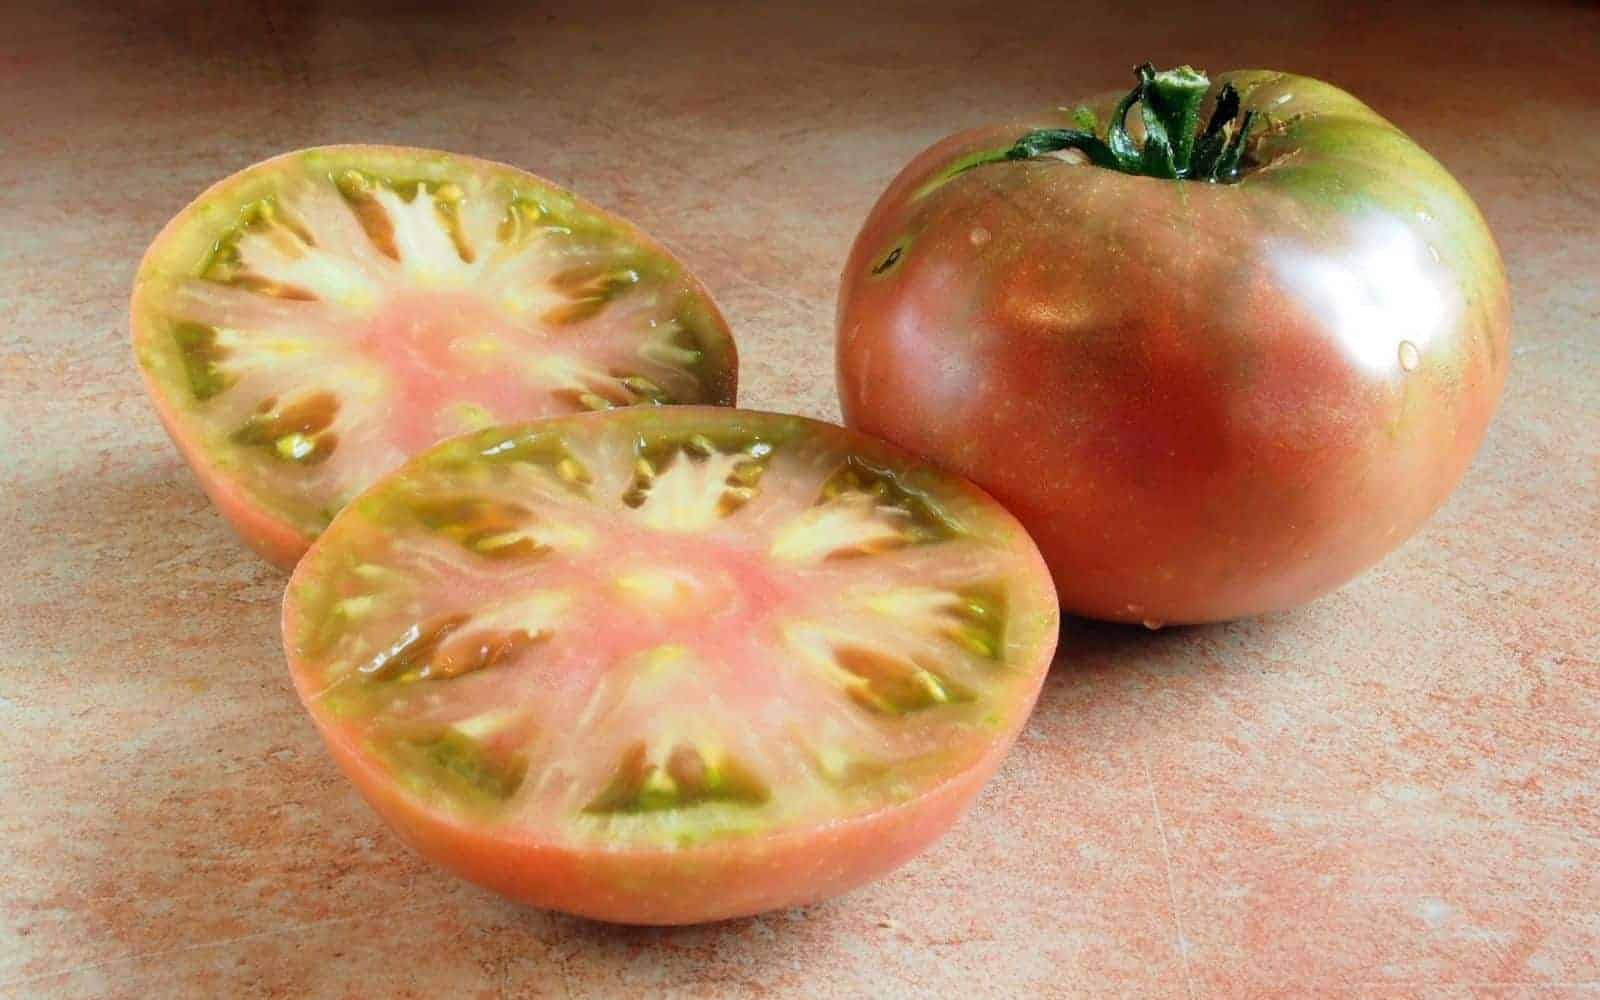 Cherokee Purple Tomato - Sliced showing inside